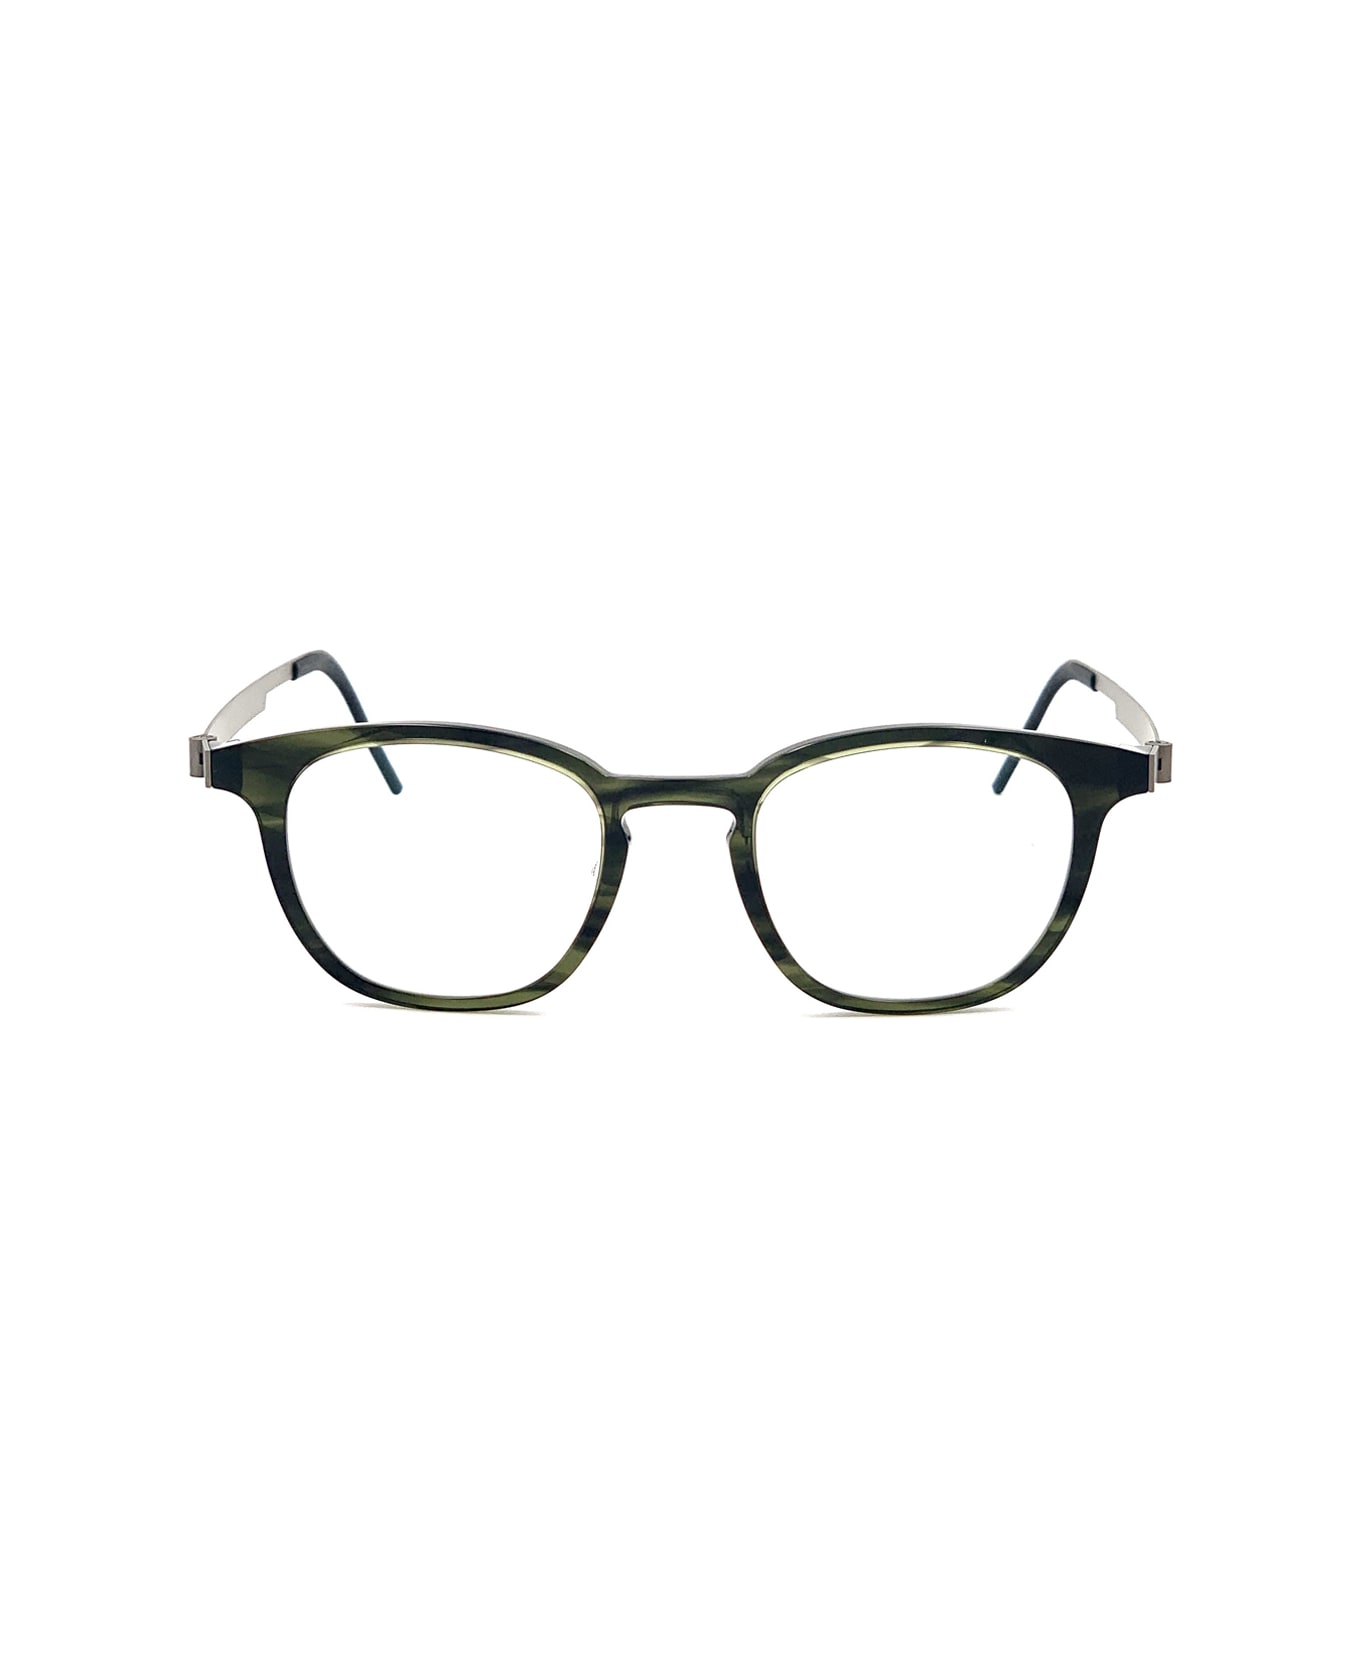 LINDBERG Acetanium 1051 Glasses - Verde アイウェア